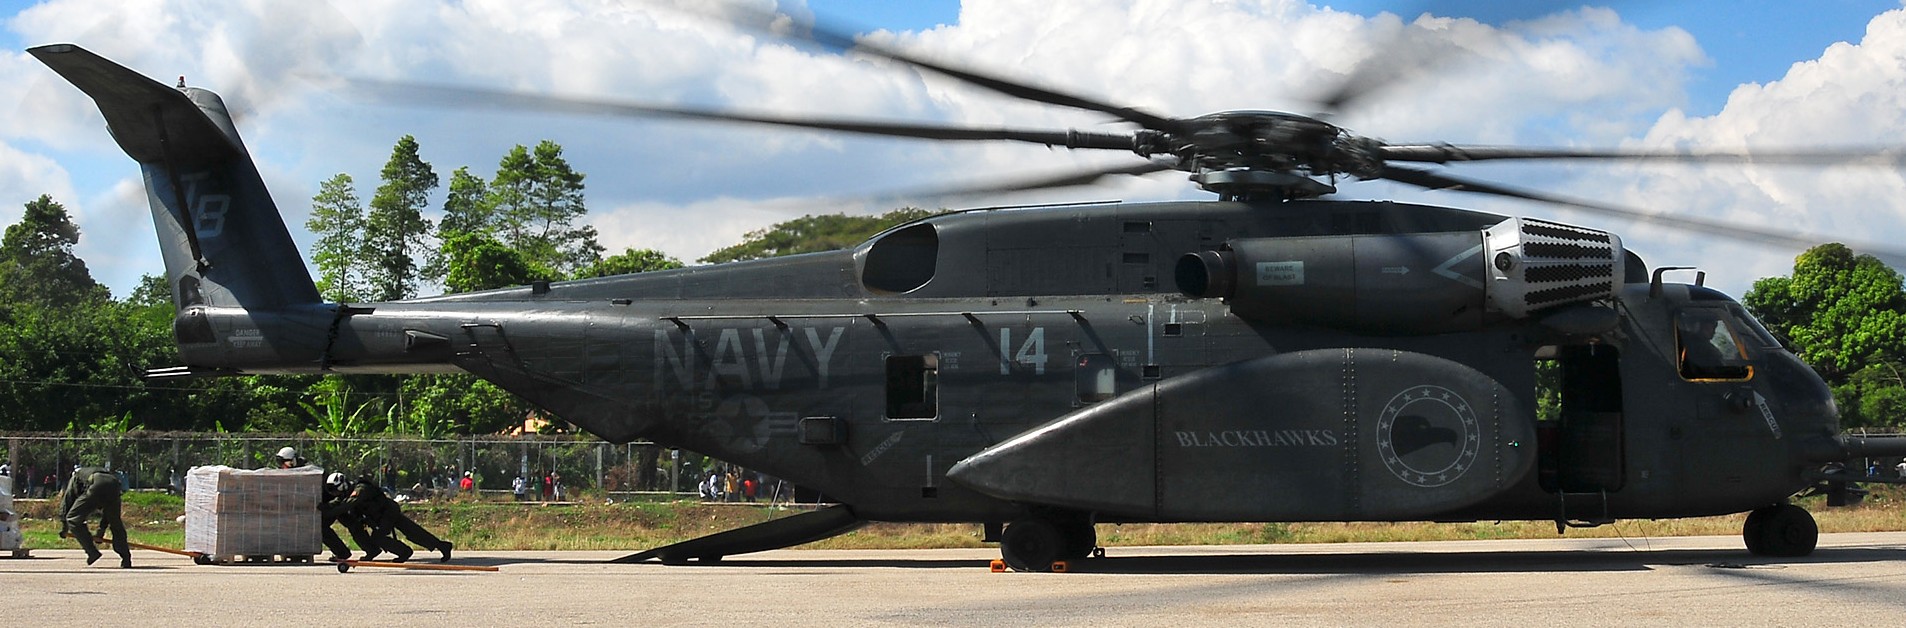 hm-15 blackhawks helicopter mine countermeasures squadron navy mh-53e sea dragon 55 haiti